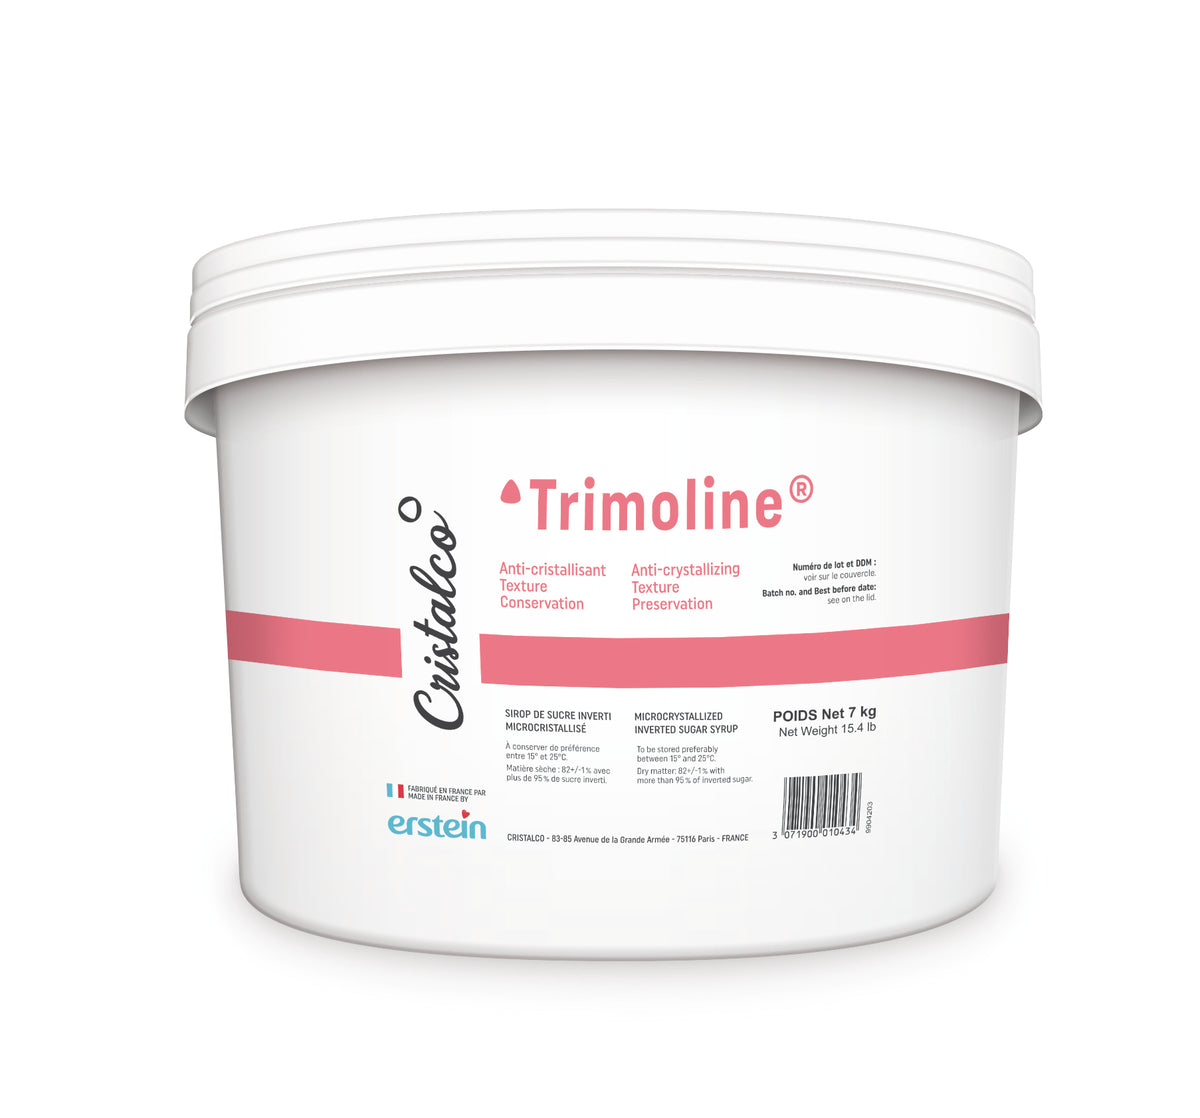 Trimoline